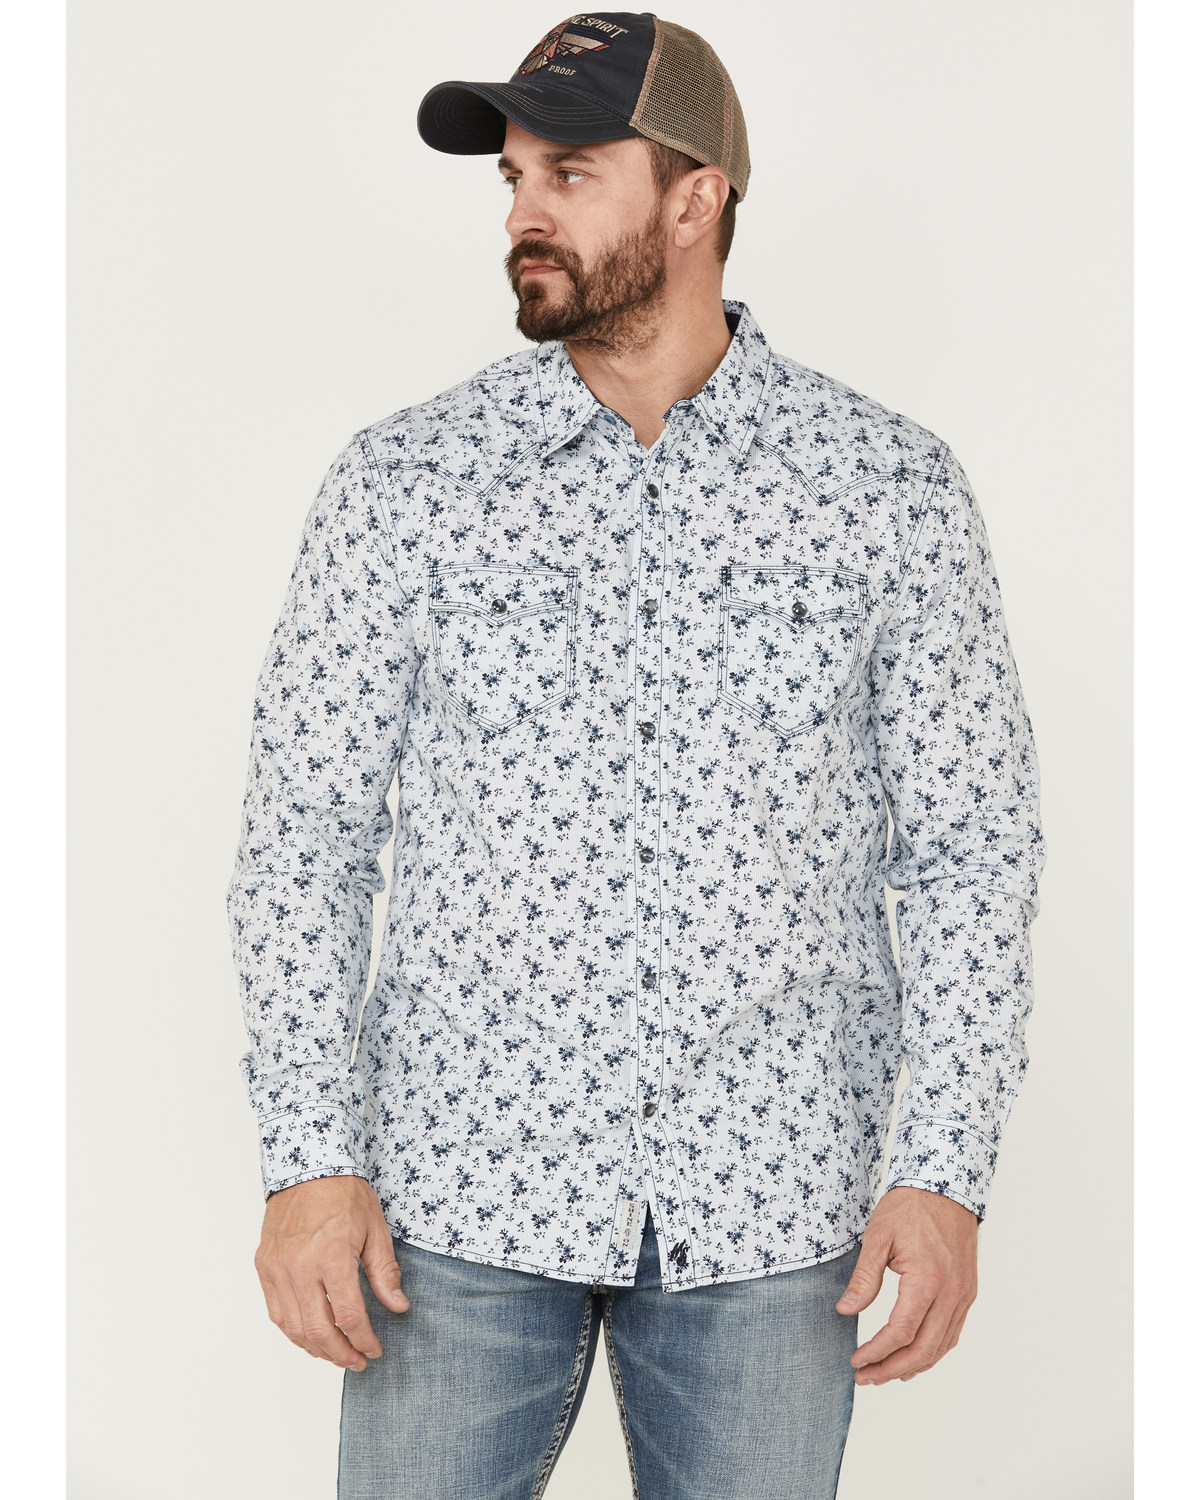 Moonshine Spirit Men's Bloom Floral Print Long Sleeve Snap Western Shirt